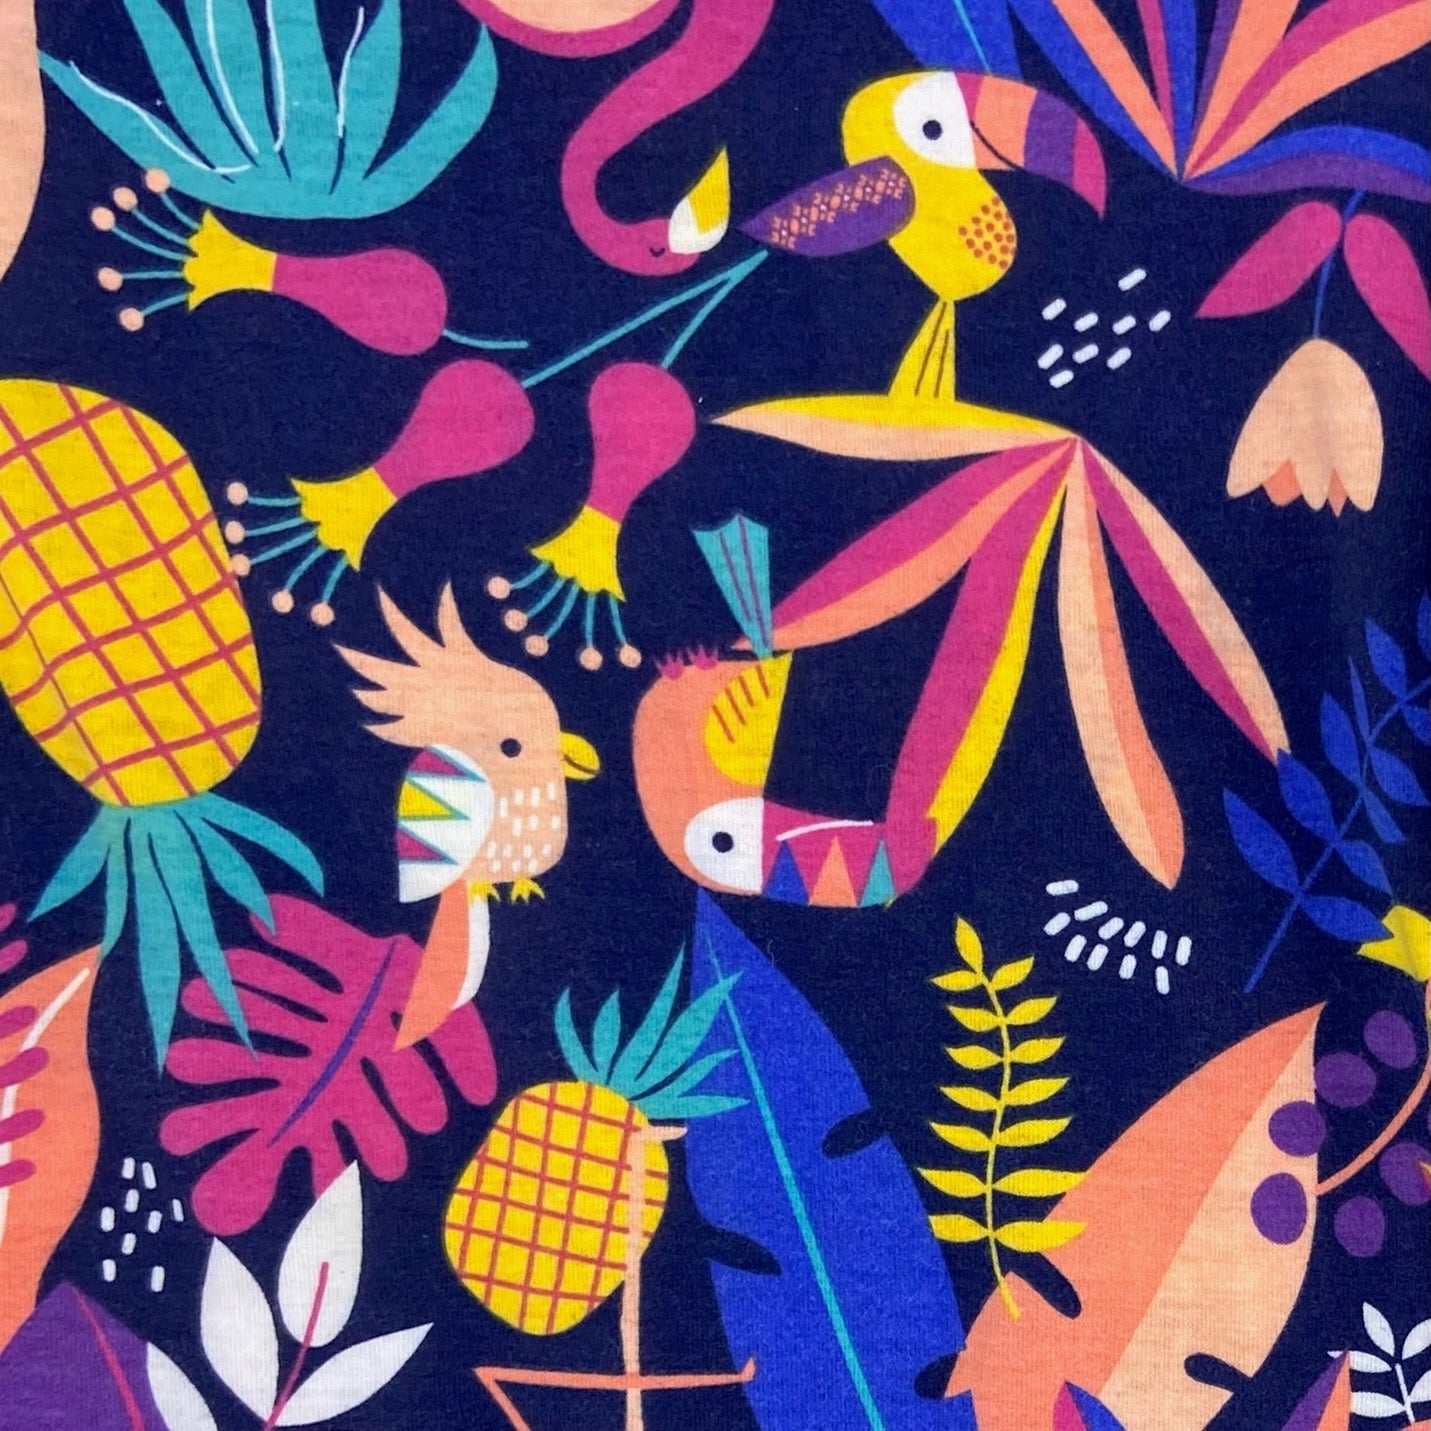 Women's Floral Pineapple Flamingo Parrot Bird Pattern Cotton PJ Shorts